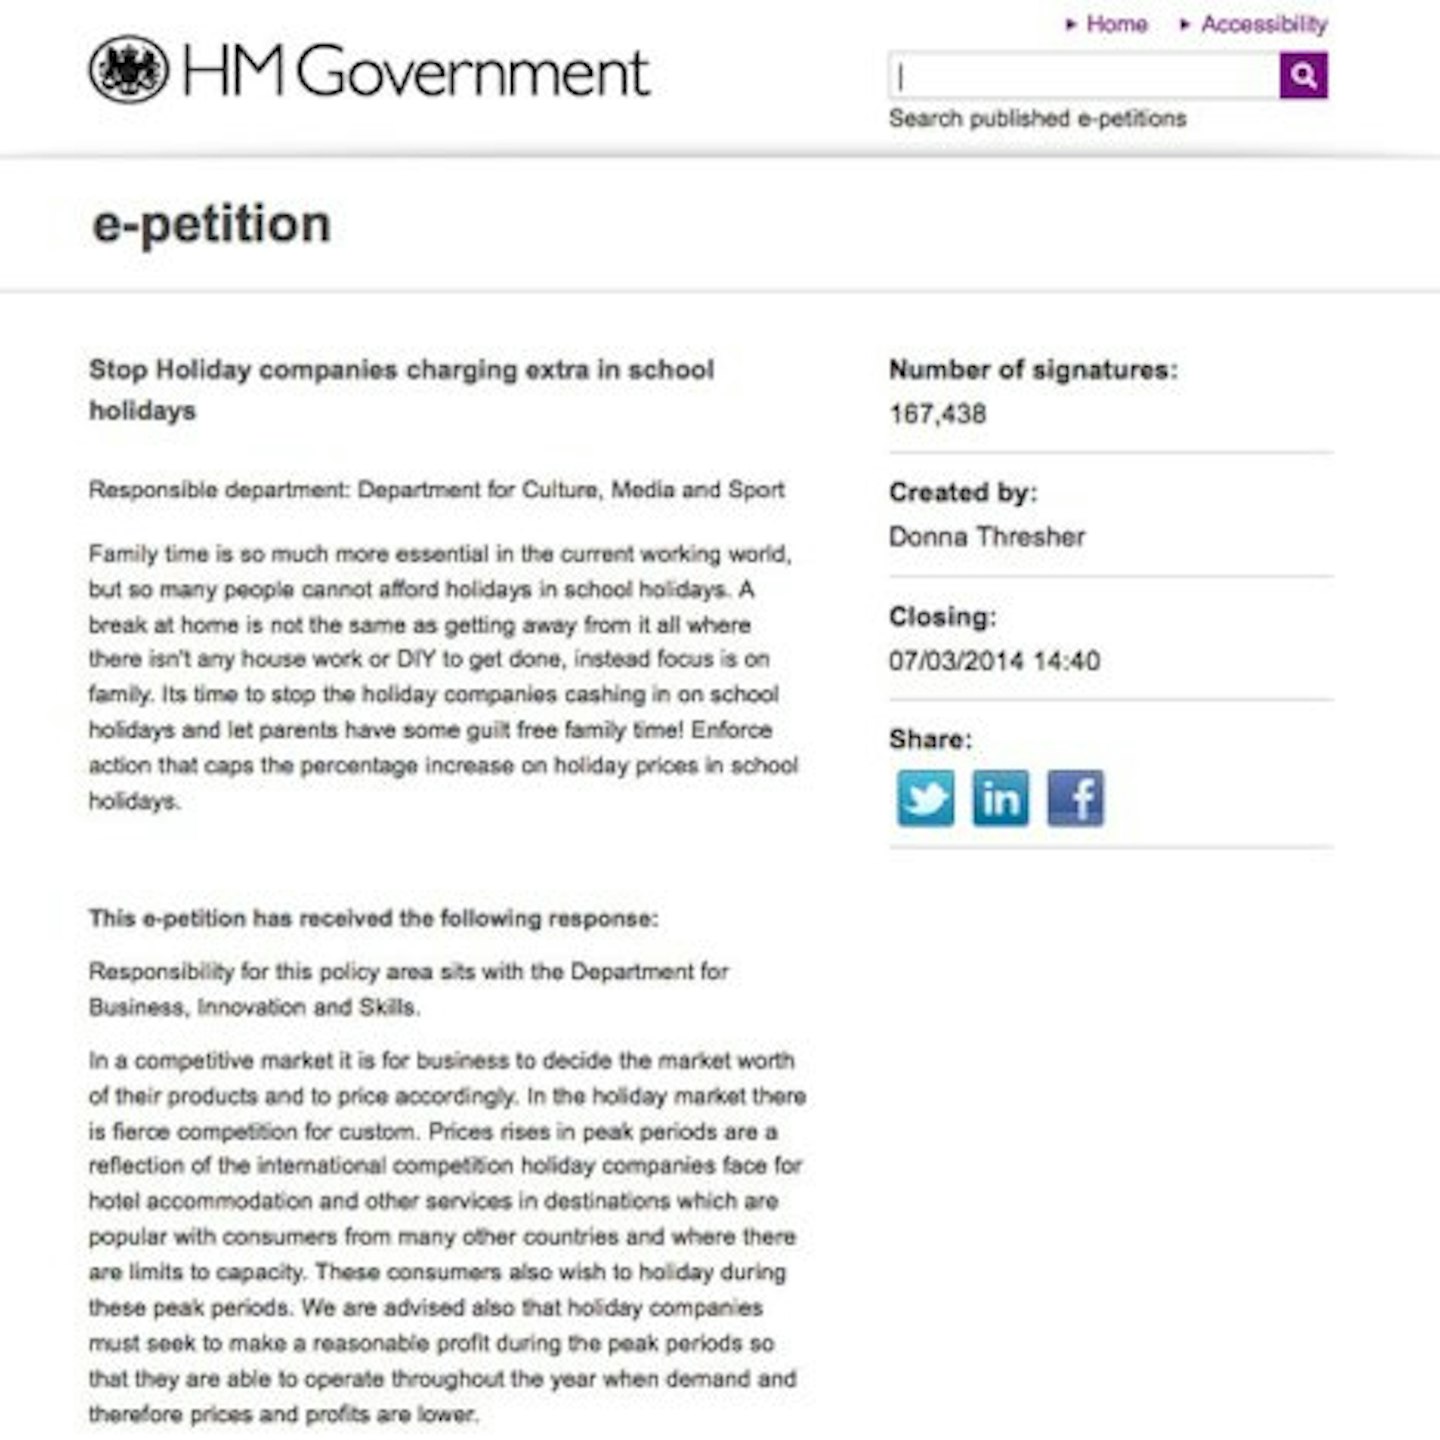 The e-petition